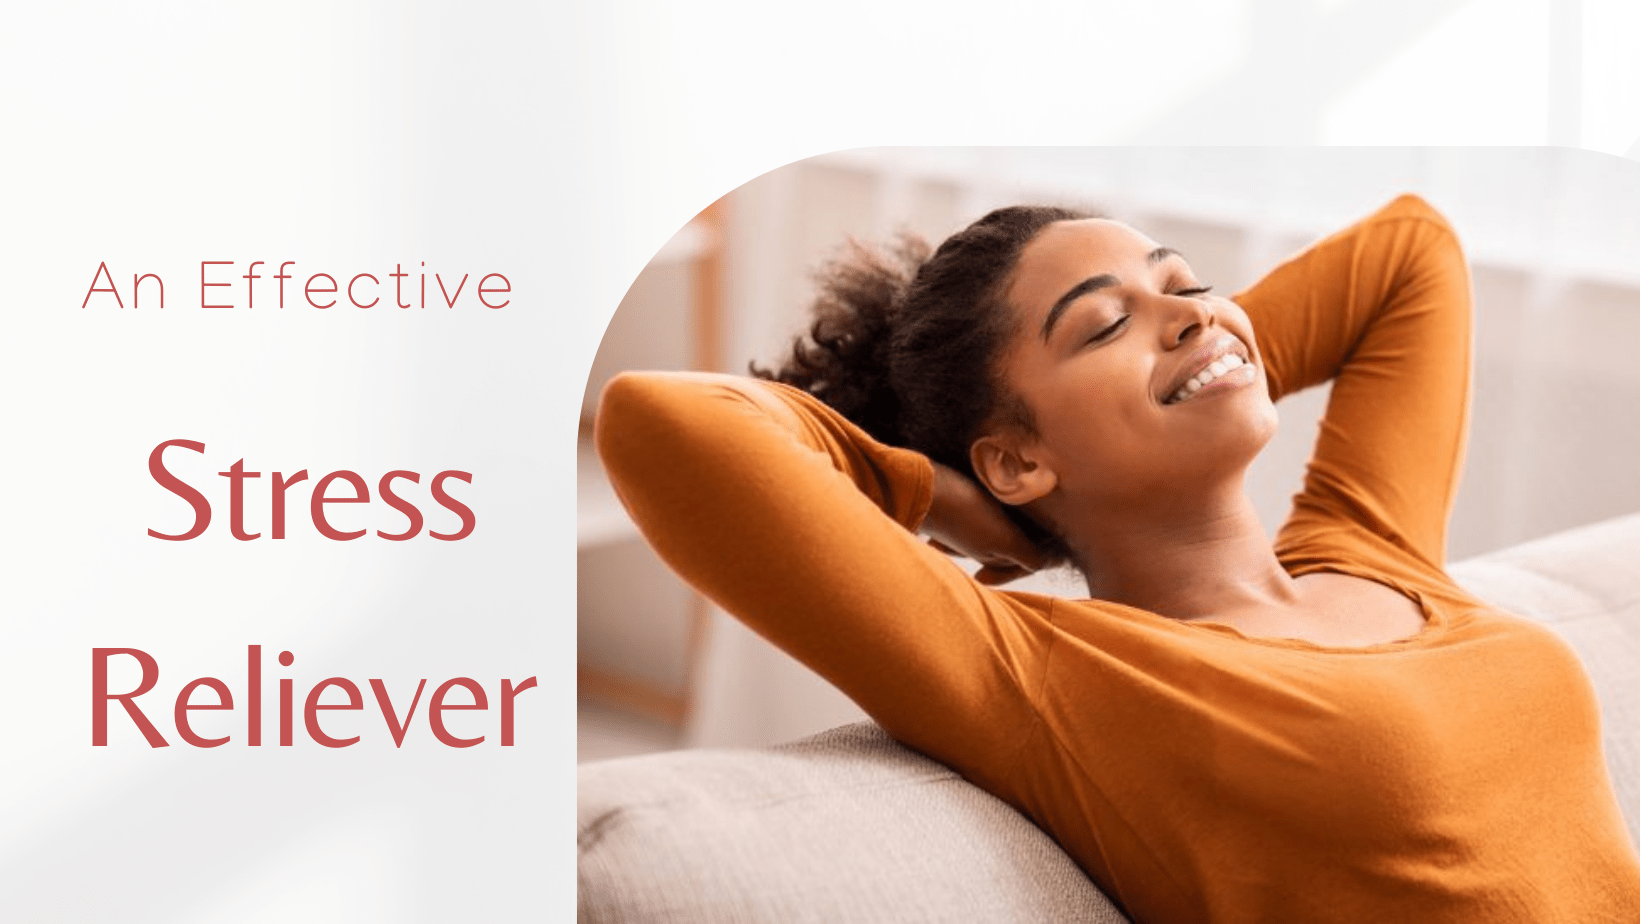 An Effective Stress Reliever